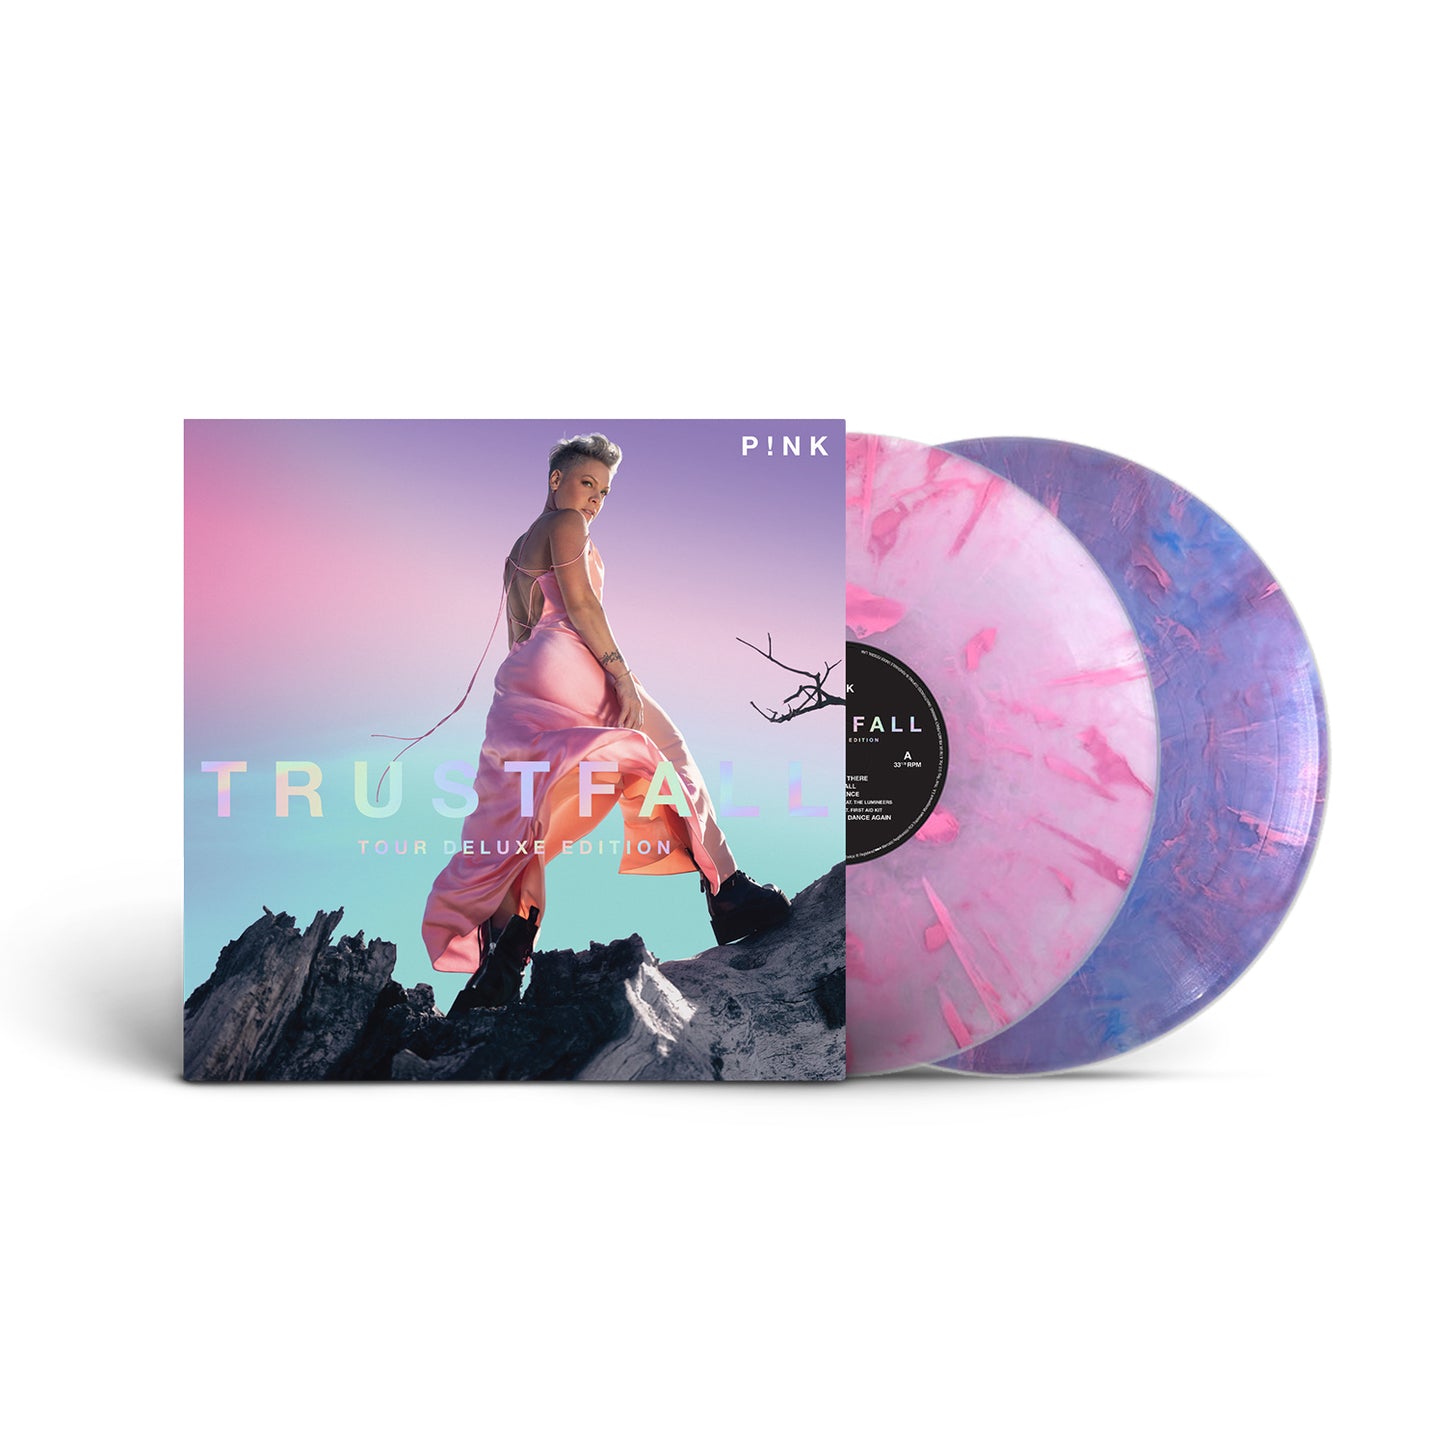 Trustfall Tour Deluxe Edition 2LP